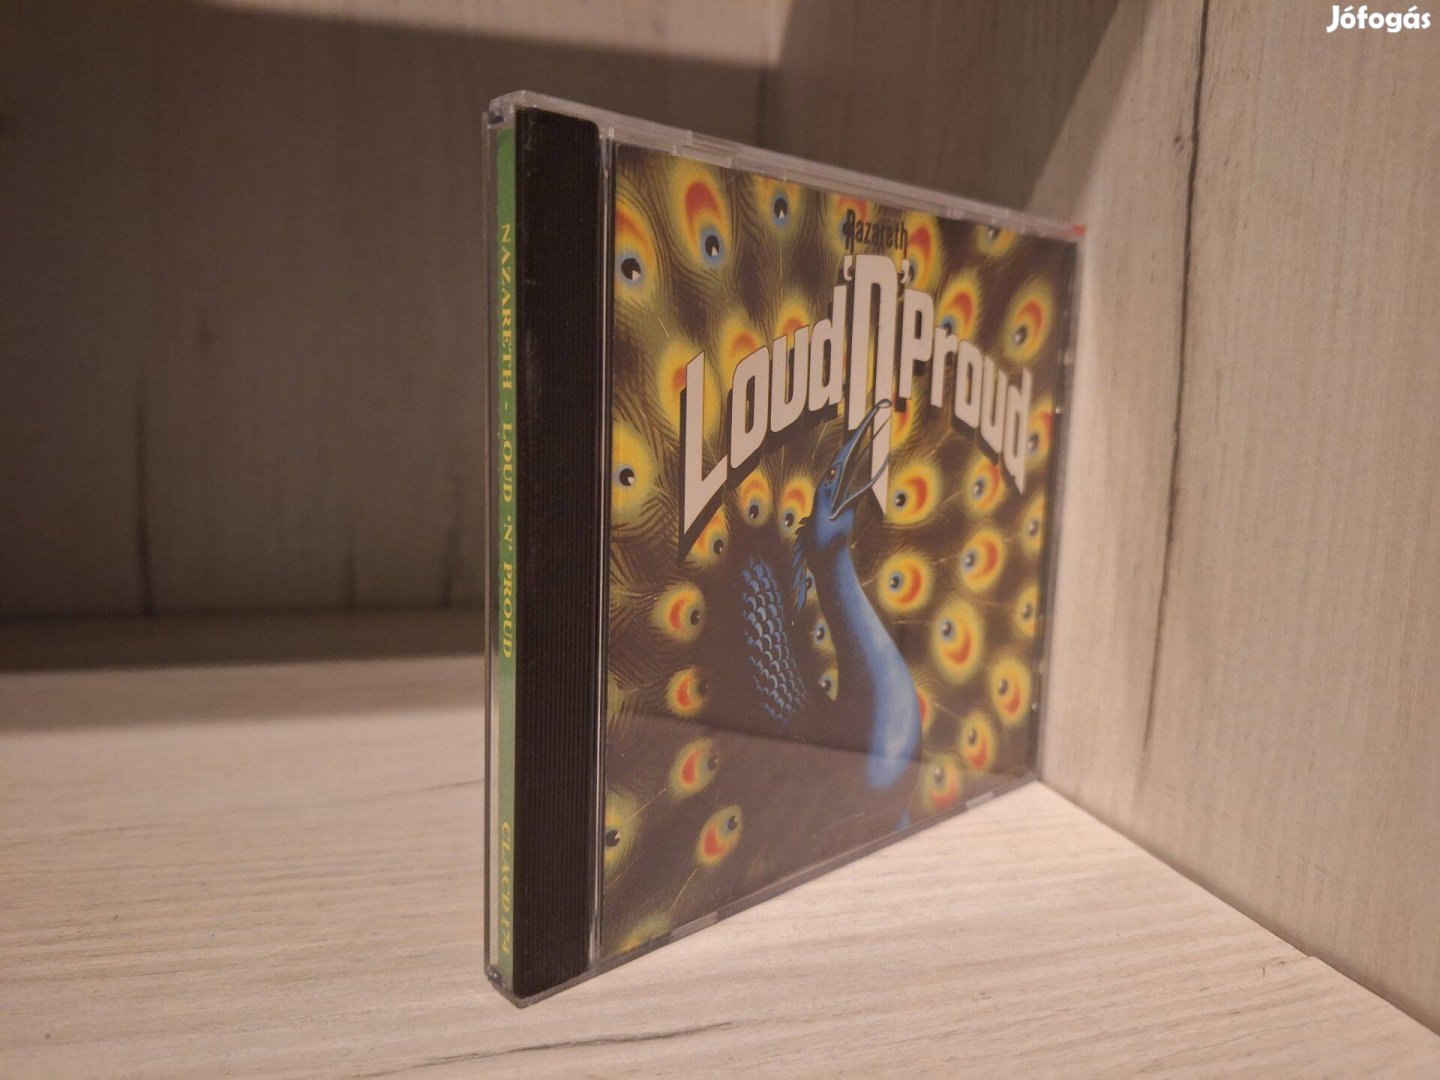 Nazareth - Loud 'N' Proud CD